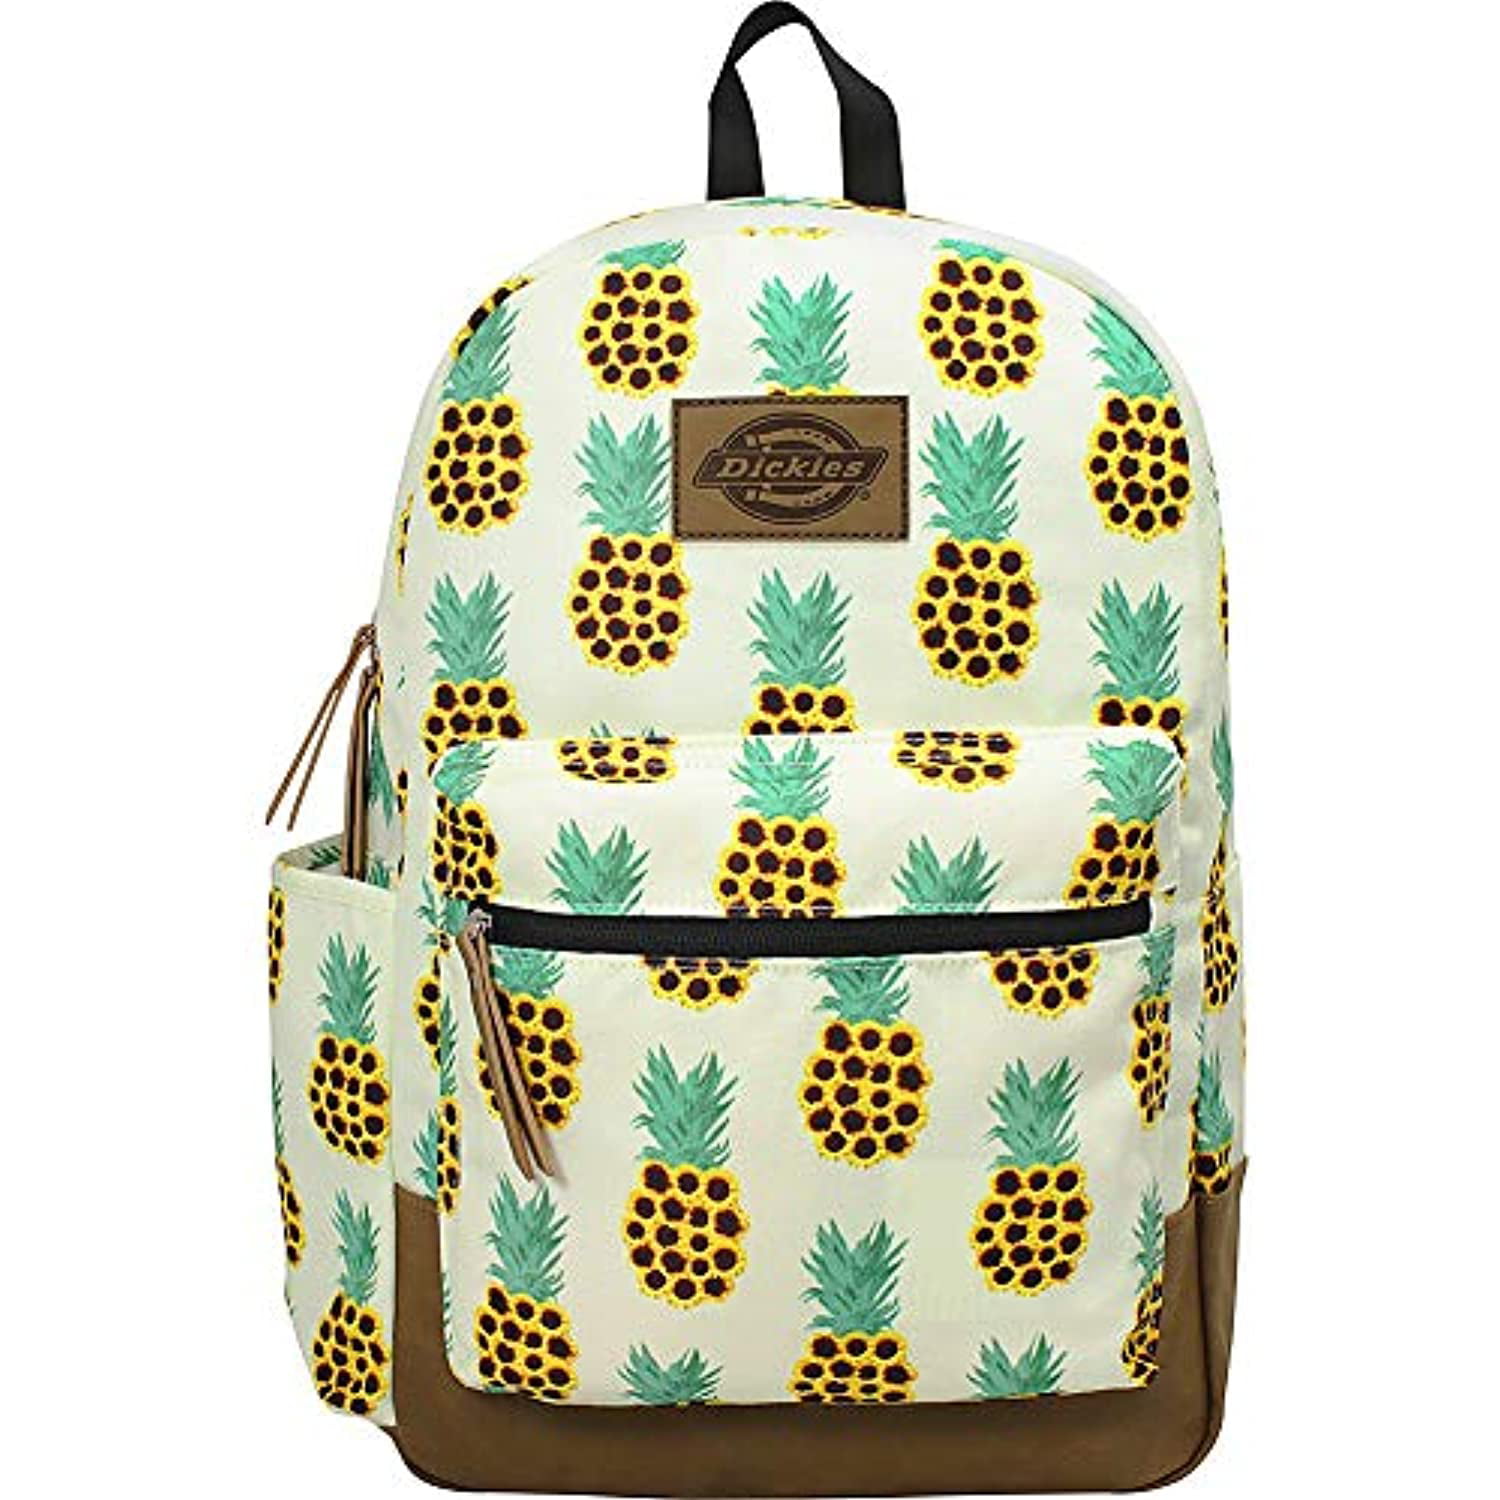 Art Pineapple Tropical Fruit Multi-Functional College Bags Students High School Girls Casual Daypack Kids Travel Backpack School Laptop Bookbags Teens Boy Outdoor Accessories 